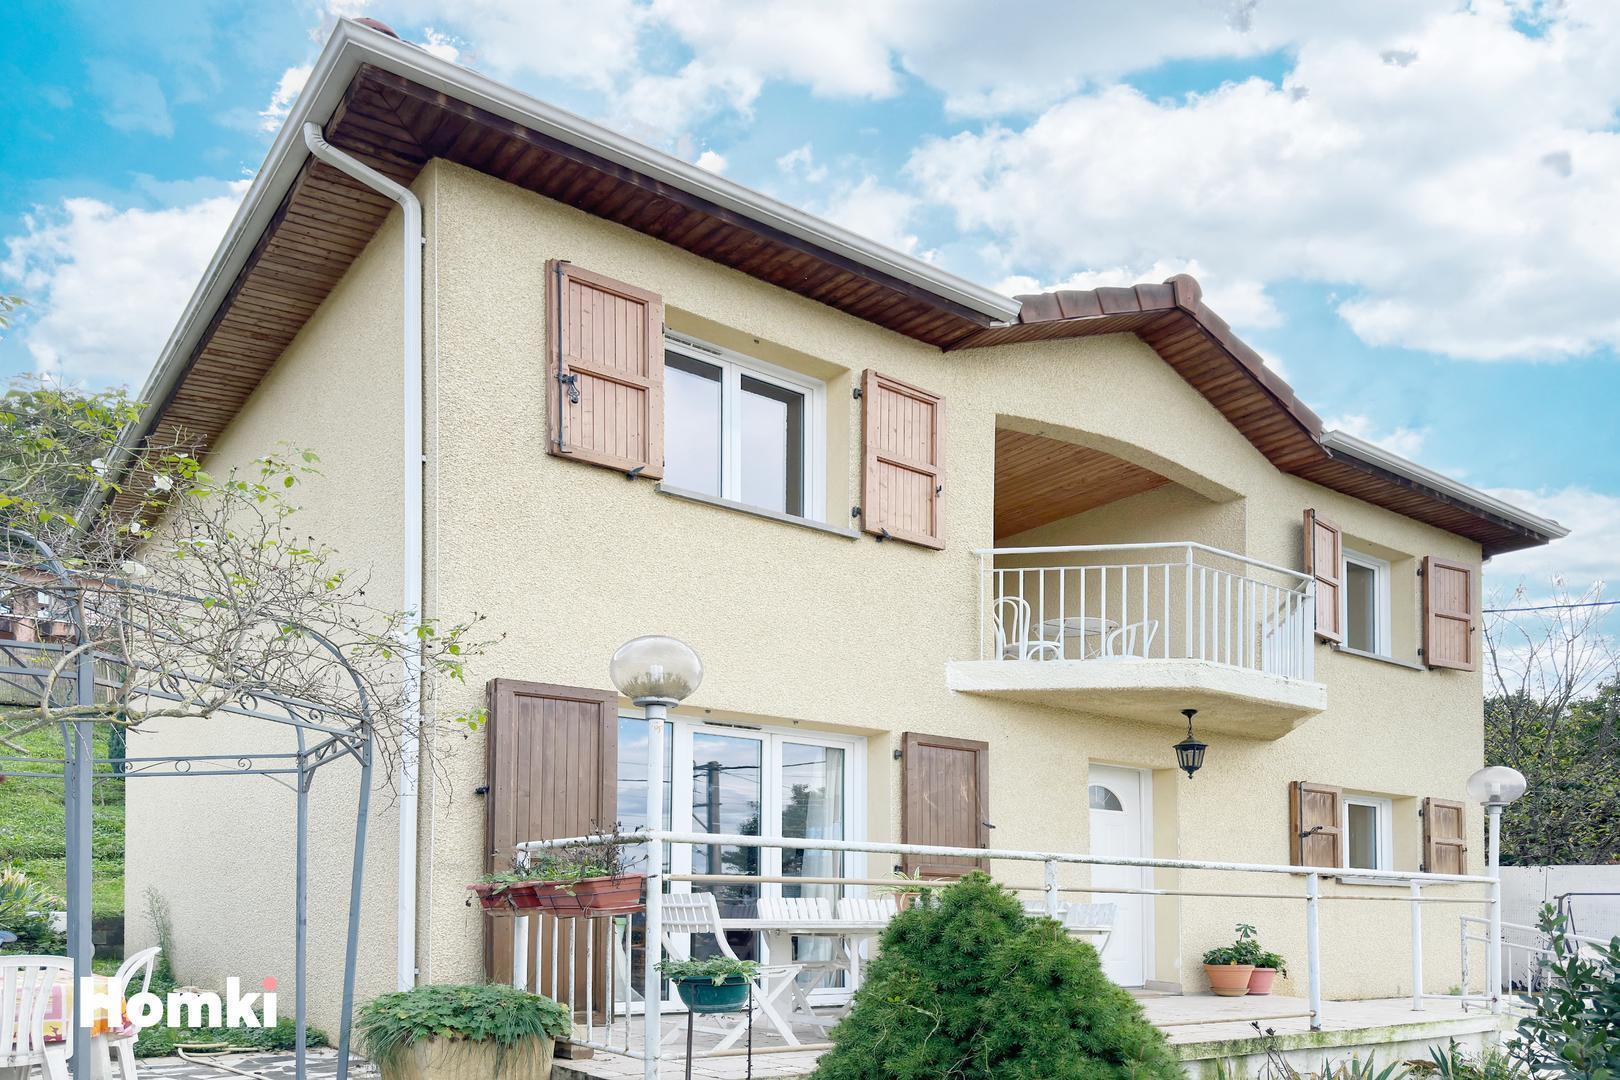 Homki - Vente Maison/villa  de 109.0 m² à Bourgoin-Jallieu 38300